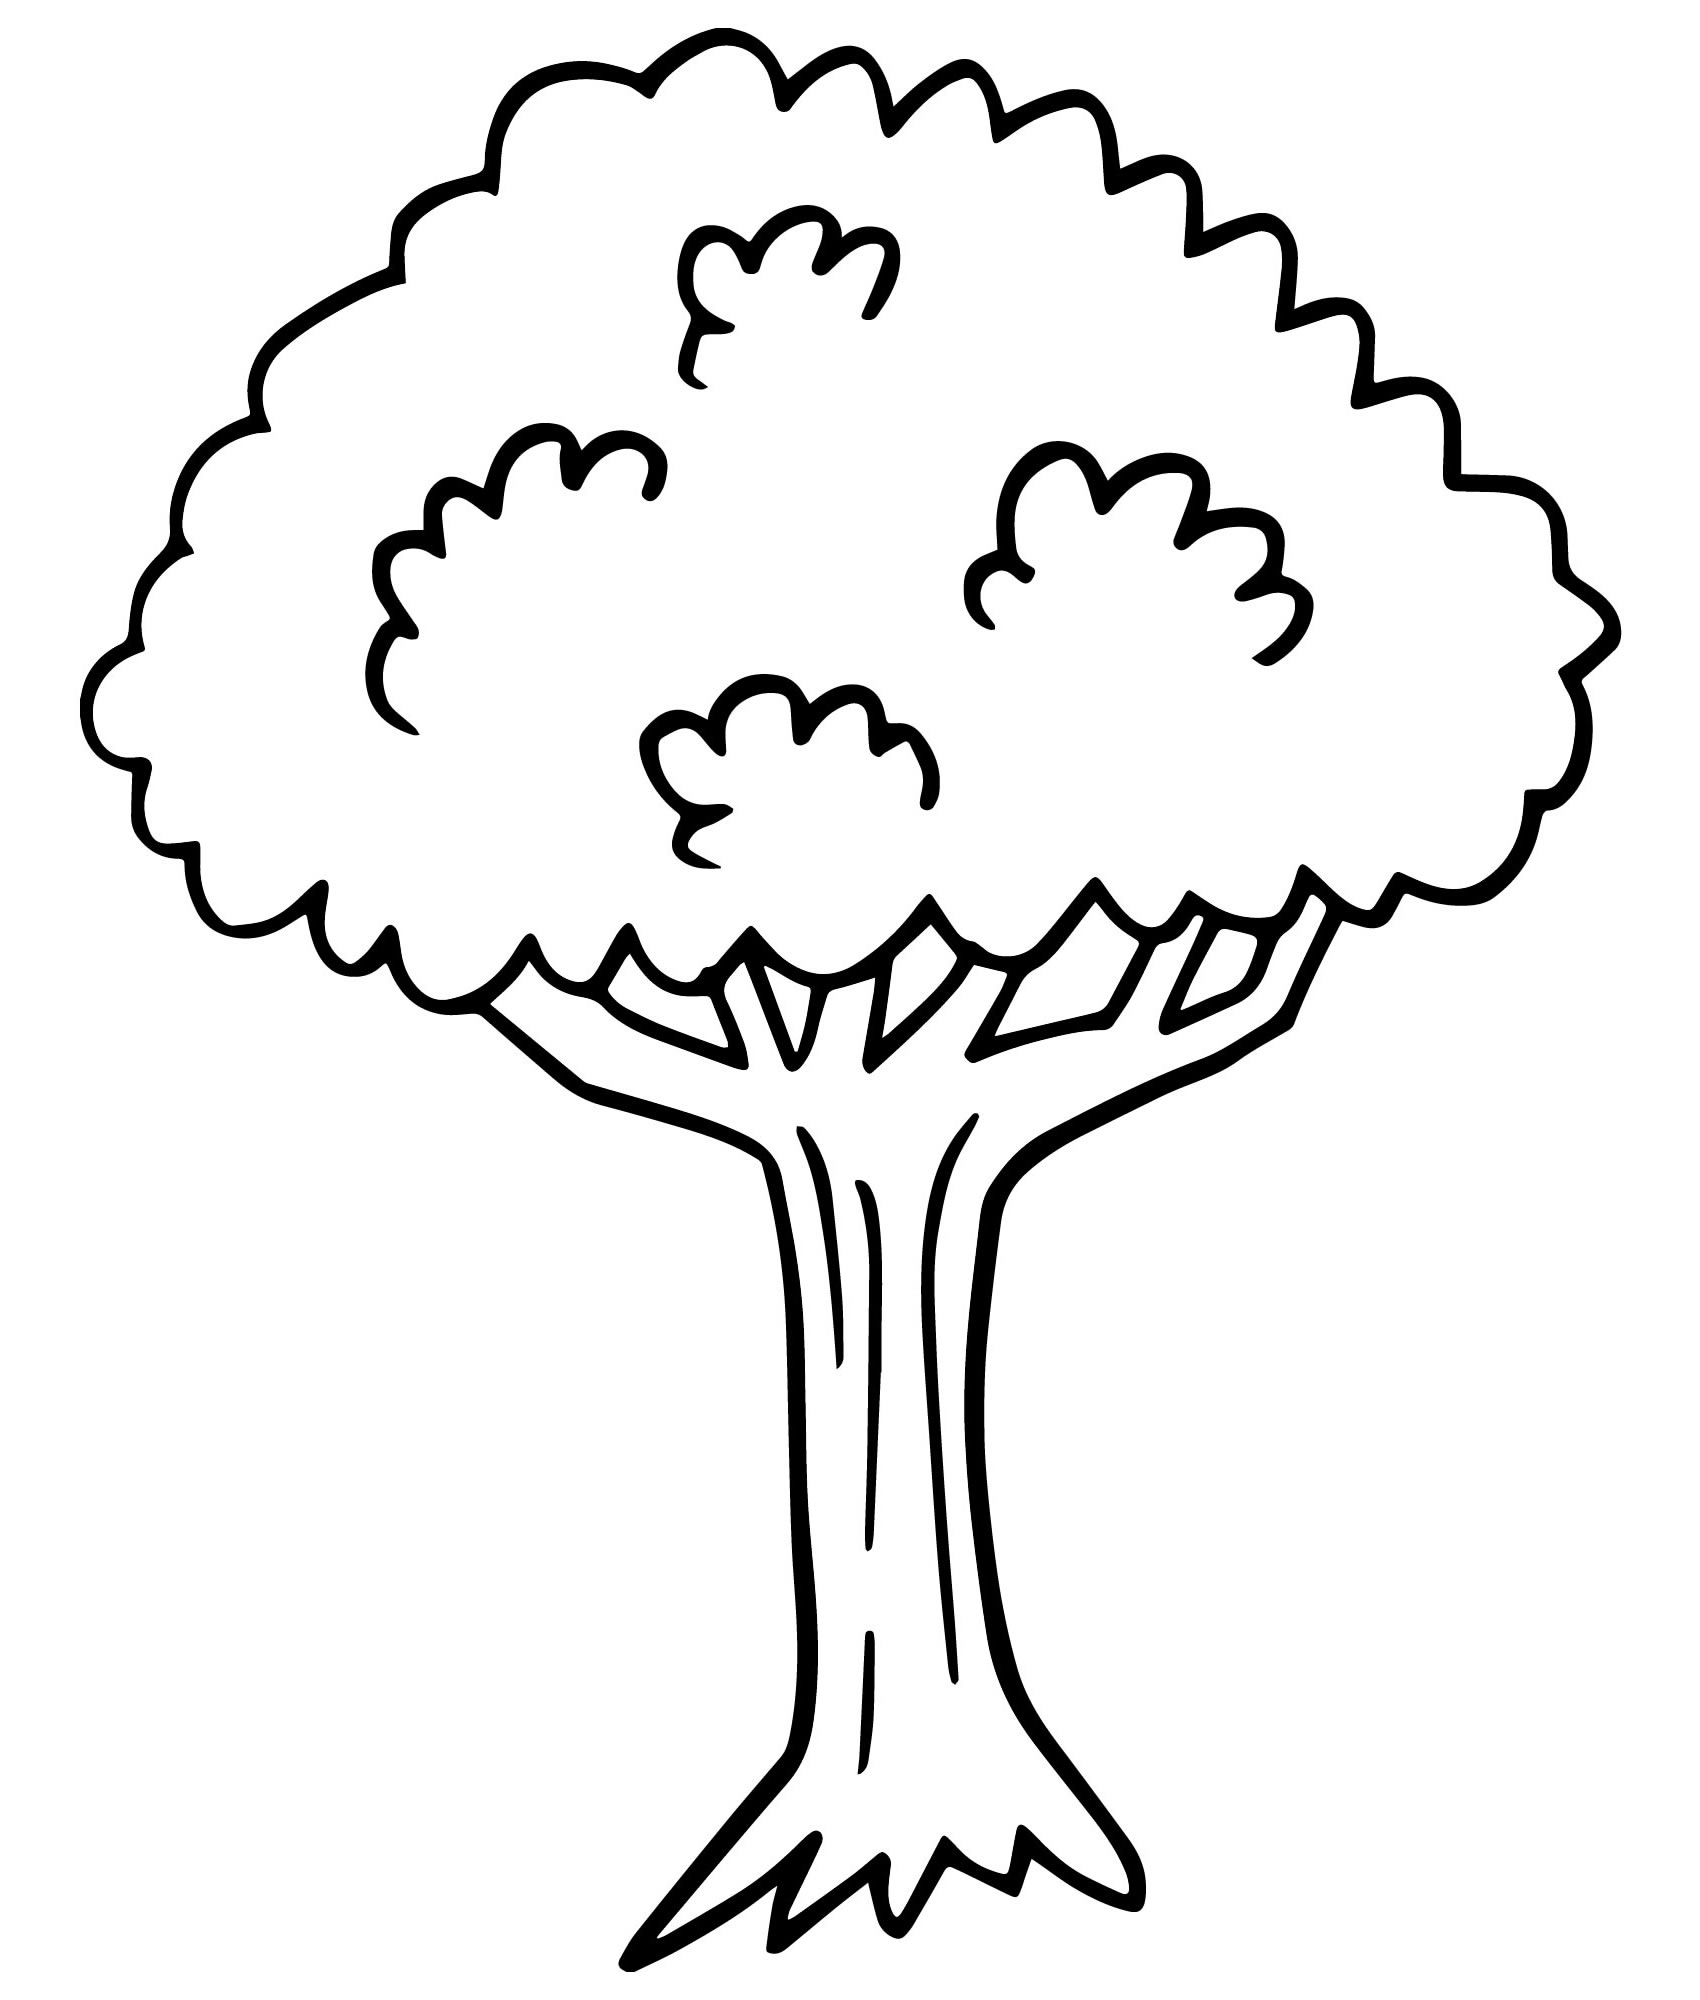 Дерево картинка